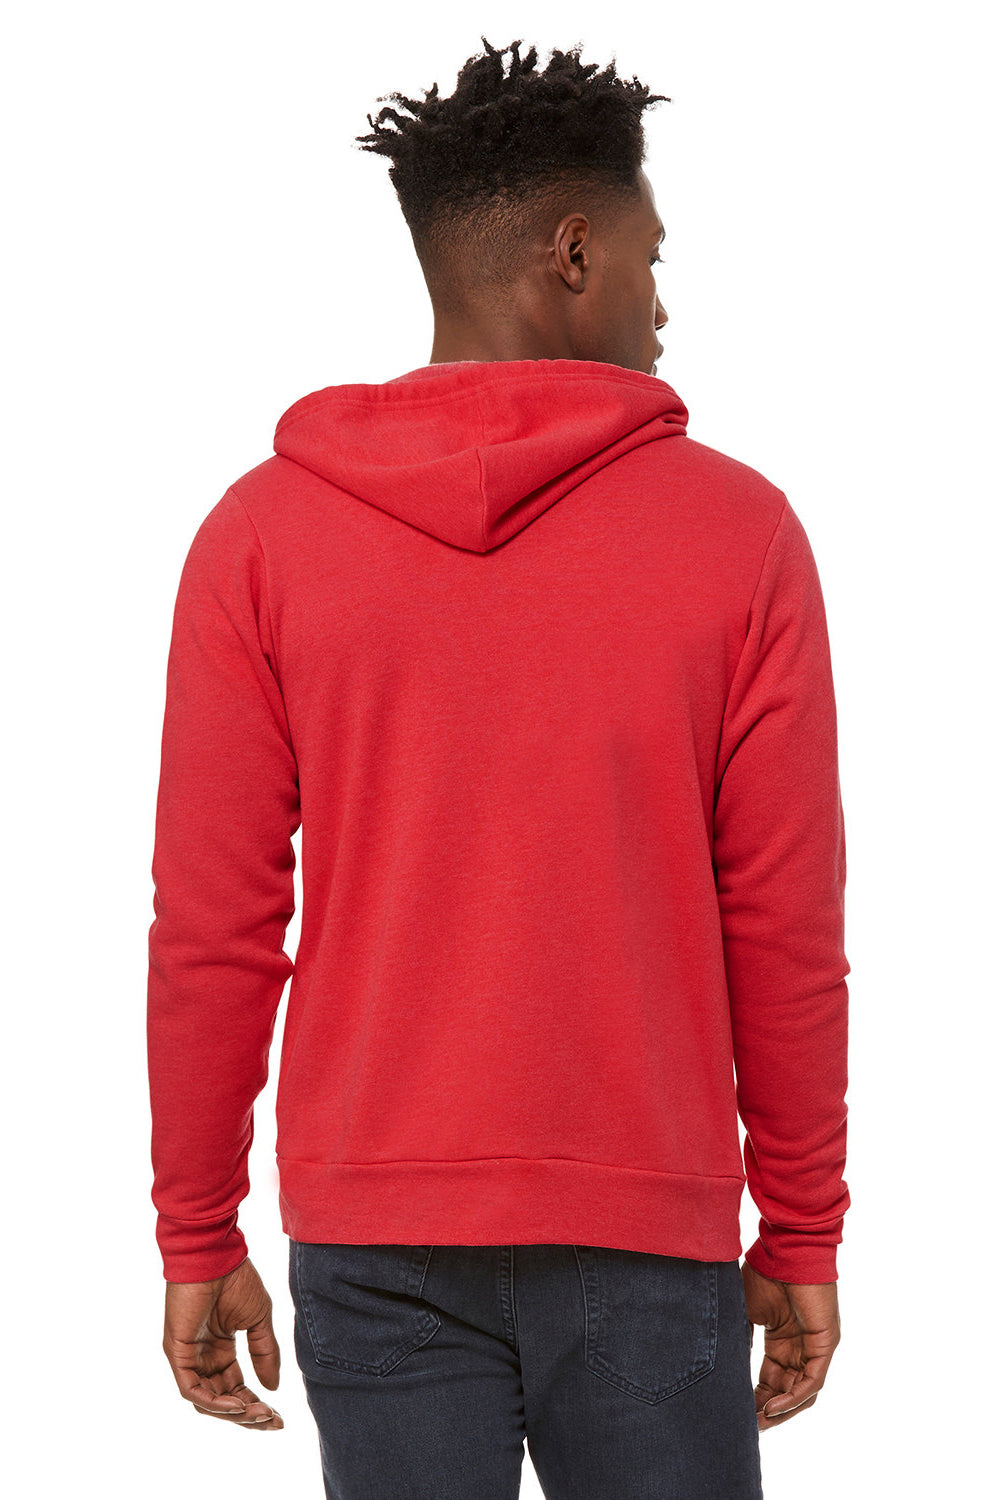 Bella + Canvas BC3739/3739 Mens Fleece Full Zip Hooded Sweatshirt Hoodie Heather Red Model Back